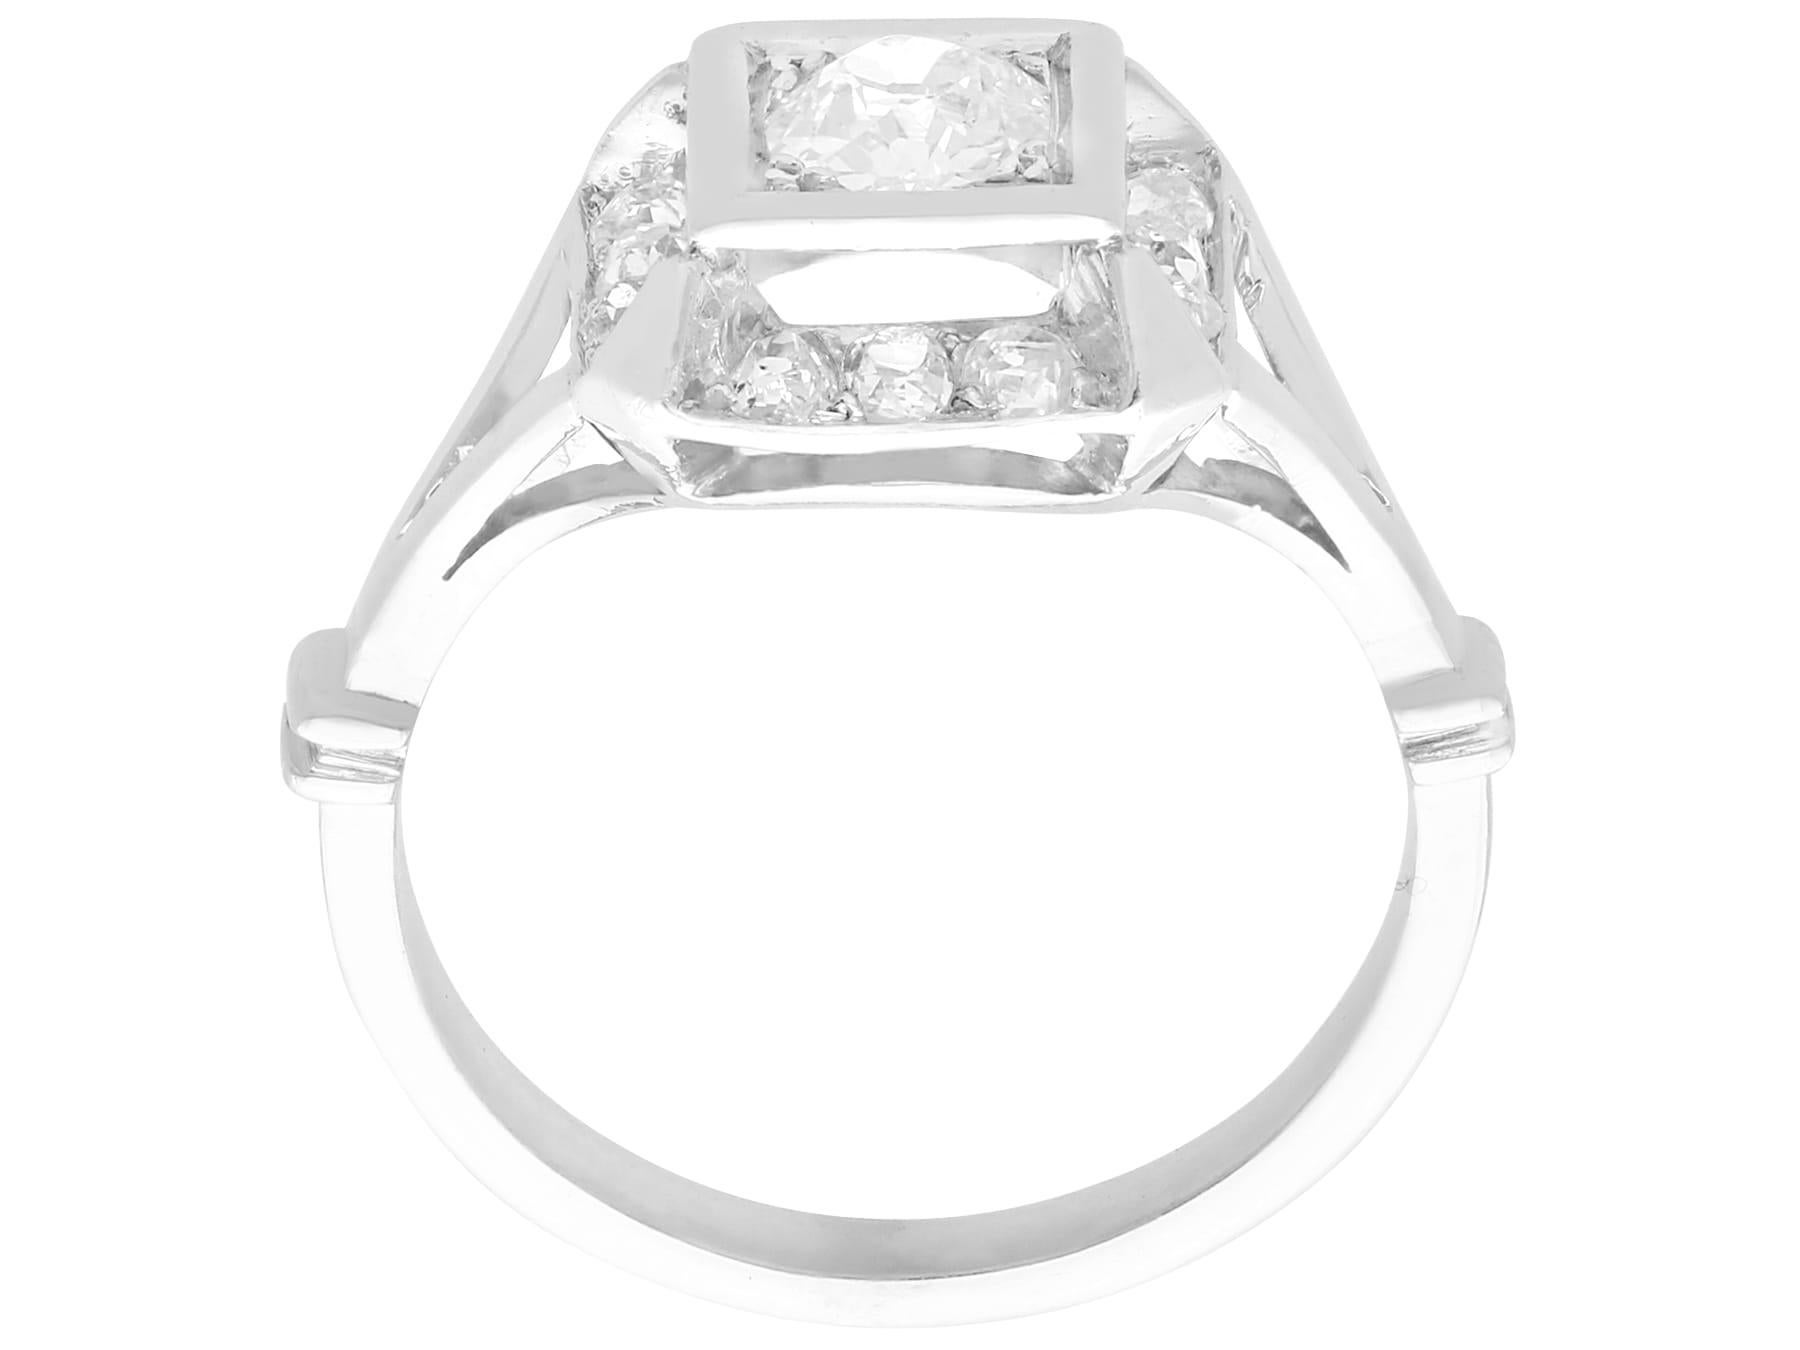 Women's or Men's Antique French 1.26 Carat Diamond and Platinum Engagement Ring, Circa 1930